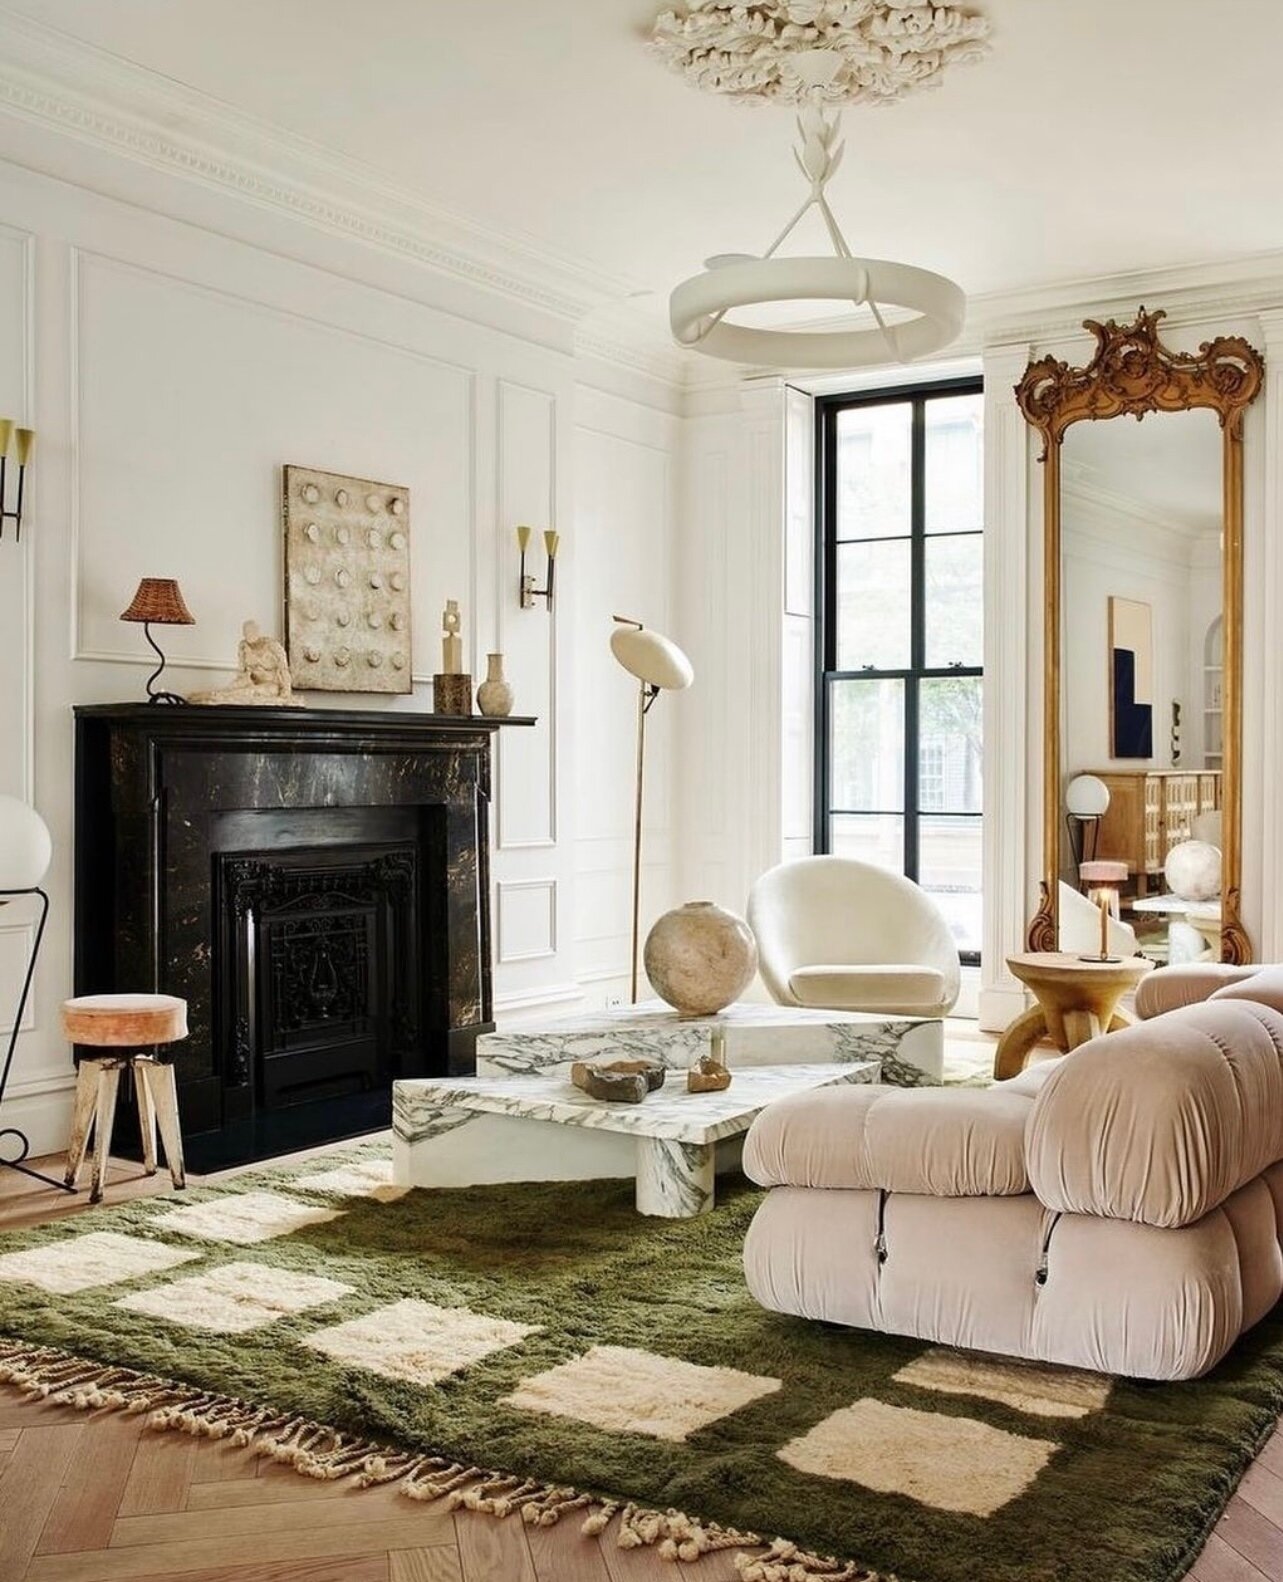 Such a dreamy living room. Throwback Sunday! (Design by @eyeswoon) #ALTforLiving #DesignerCrush⁠
.⁠
.⁠
.⁠
.⁠
.⁠
.⁠
#ALTInteriors #NYCInteriors #LivingRoomDesign #StylishInteriors #ChicInteriors #InteriorDesign #Interiors #Design #HomeDesign #Interior